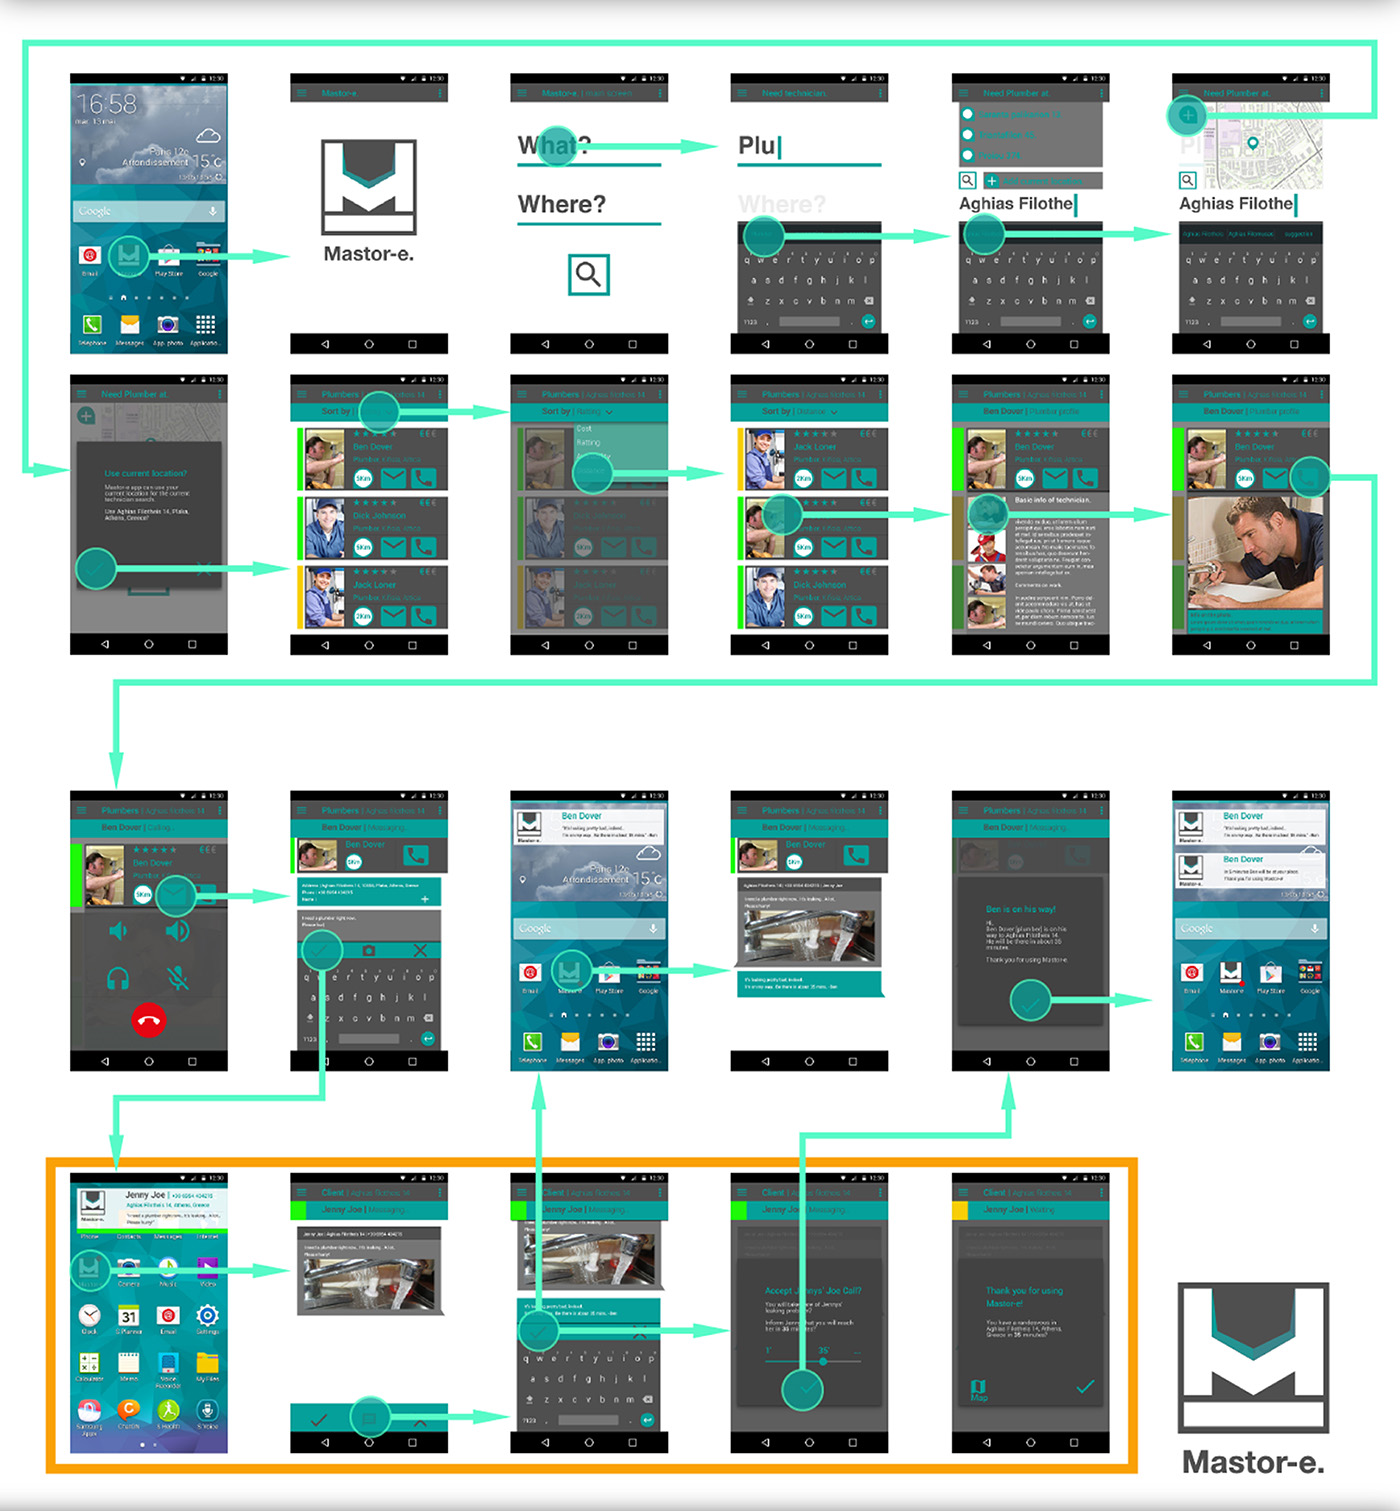 technician search app location based service technician material design Samsung Android App android user experience User Experience Design AUEB Innovathens eltrun hamac